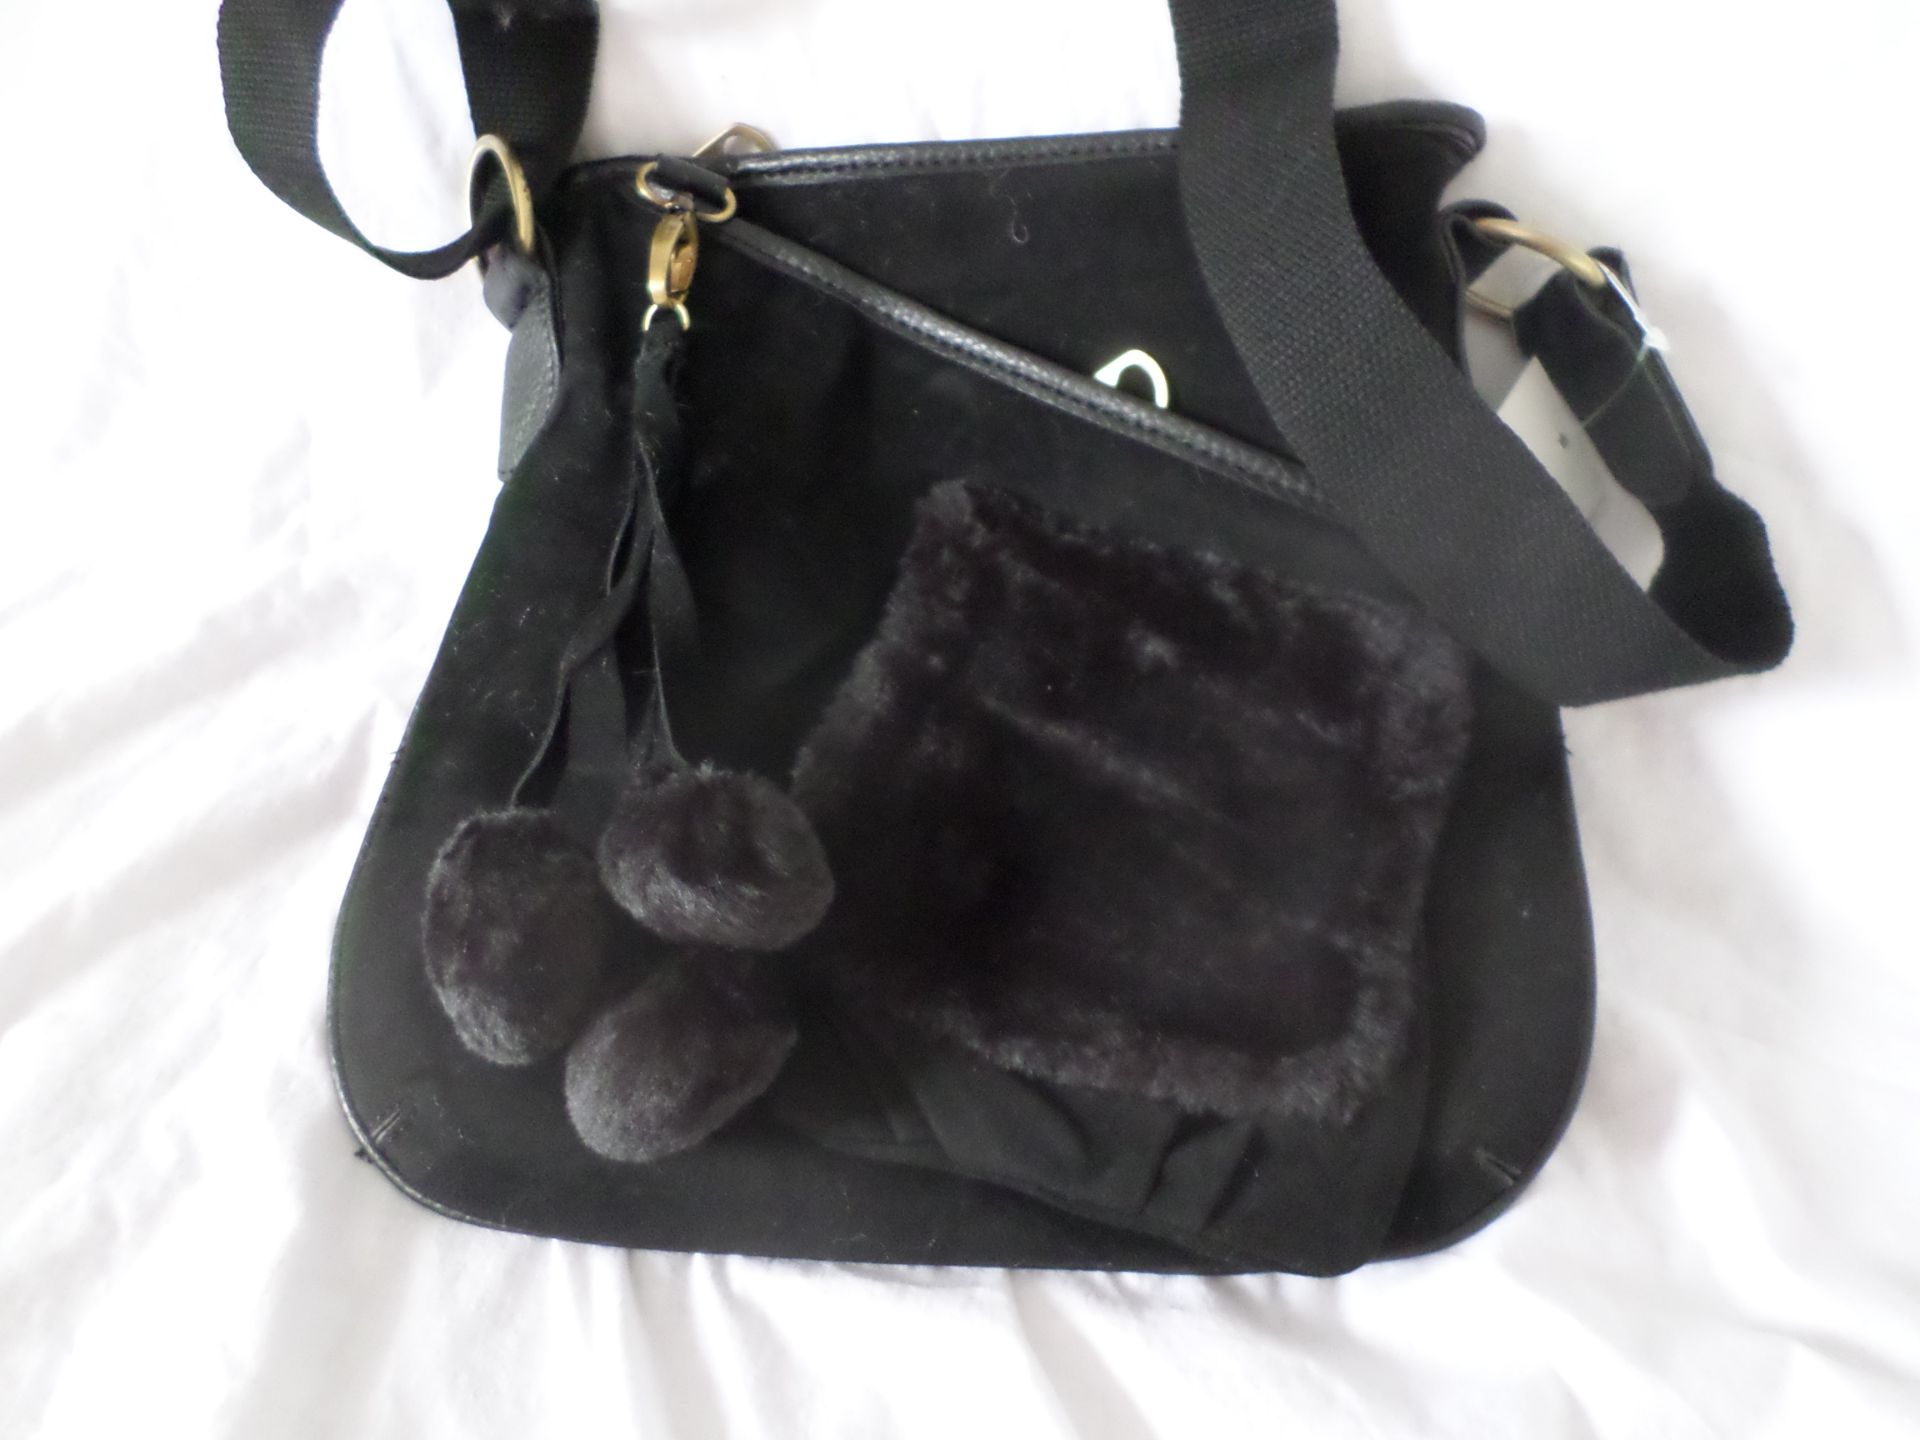 2 x Fur Crossover Handbags. Brand New. RRP £19.99 Each - Image 3 of 3